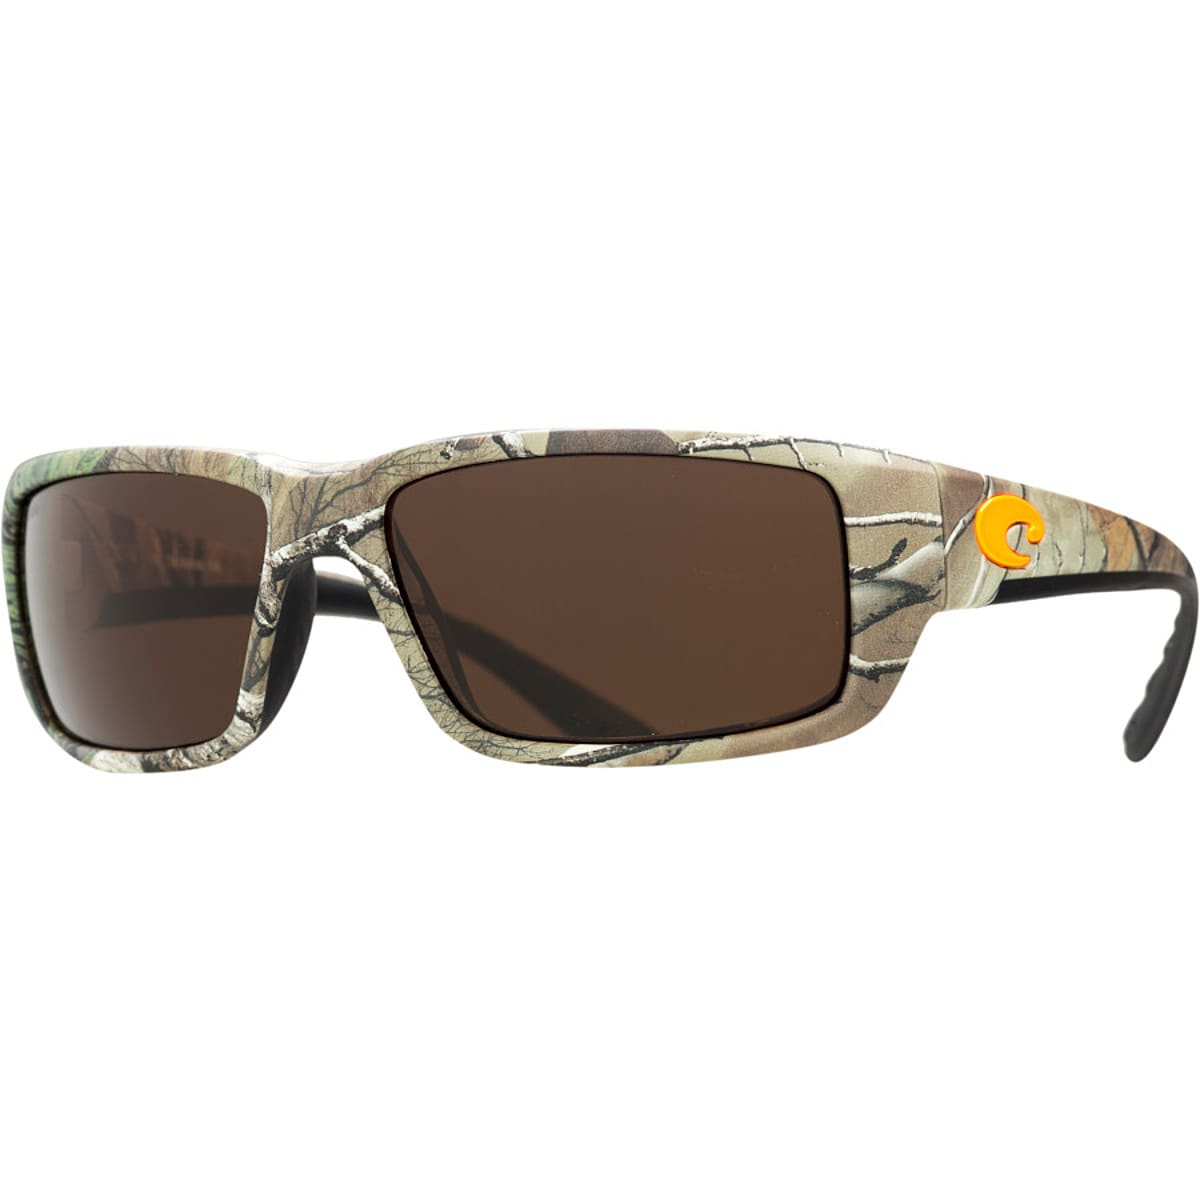 Costa Fisch Realtree Xtra Camo Polarized 400G Sunglasses - Men's